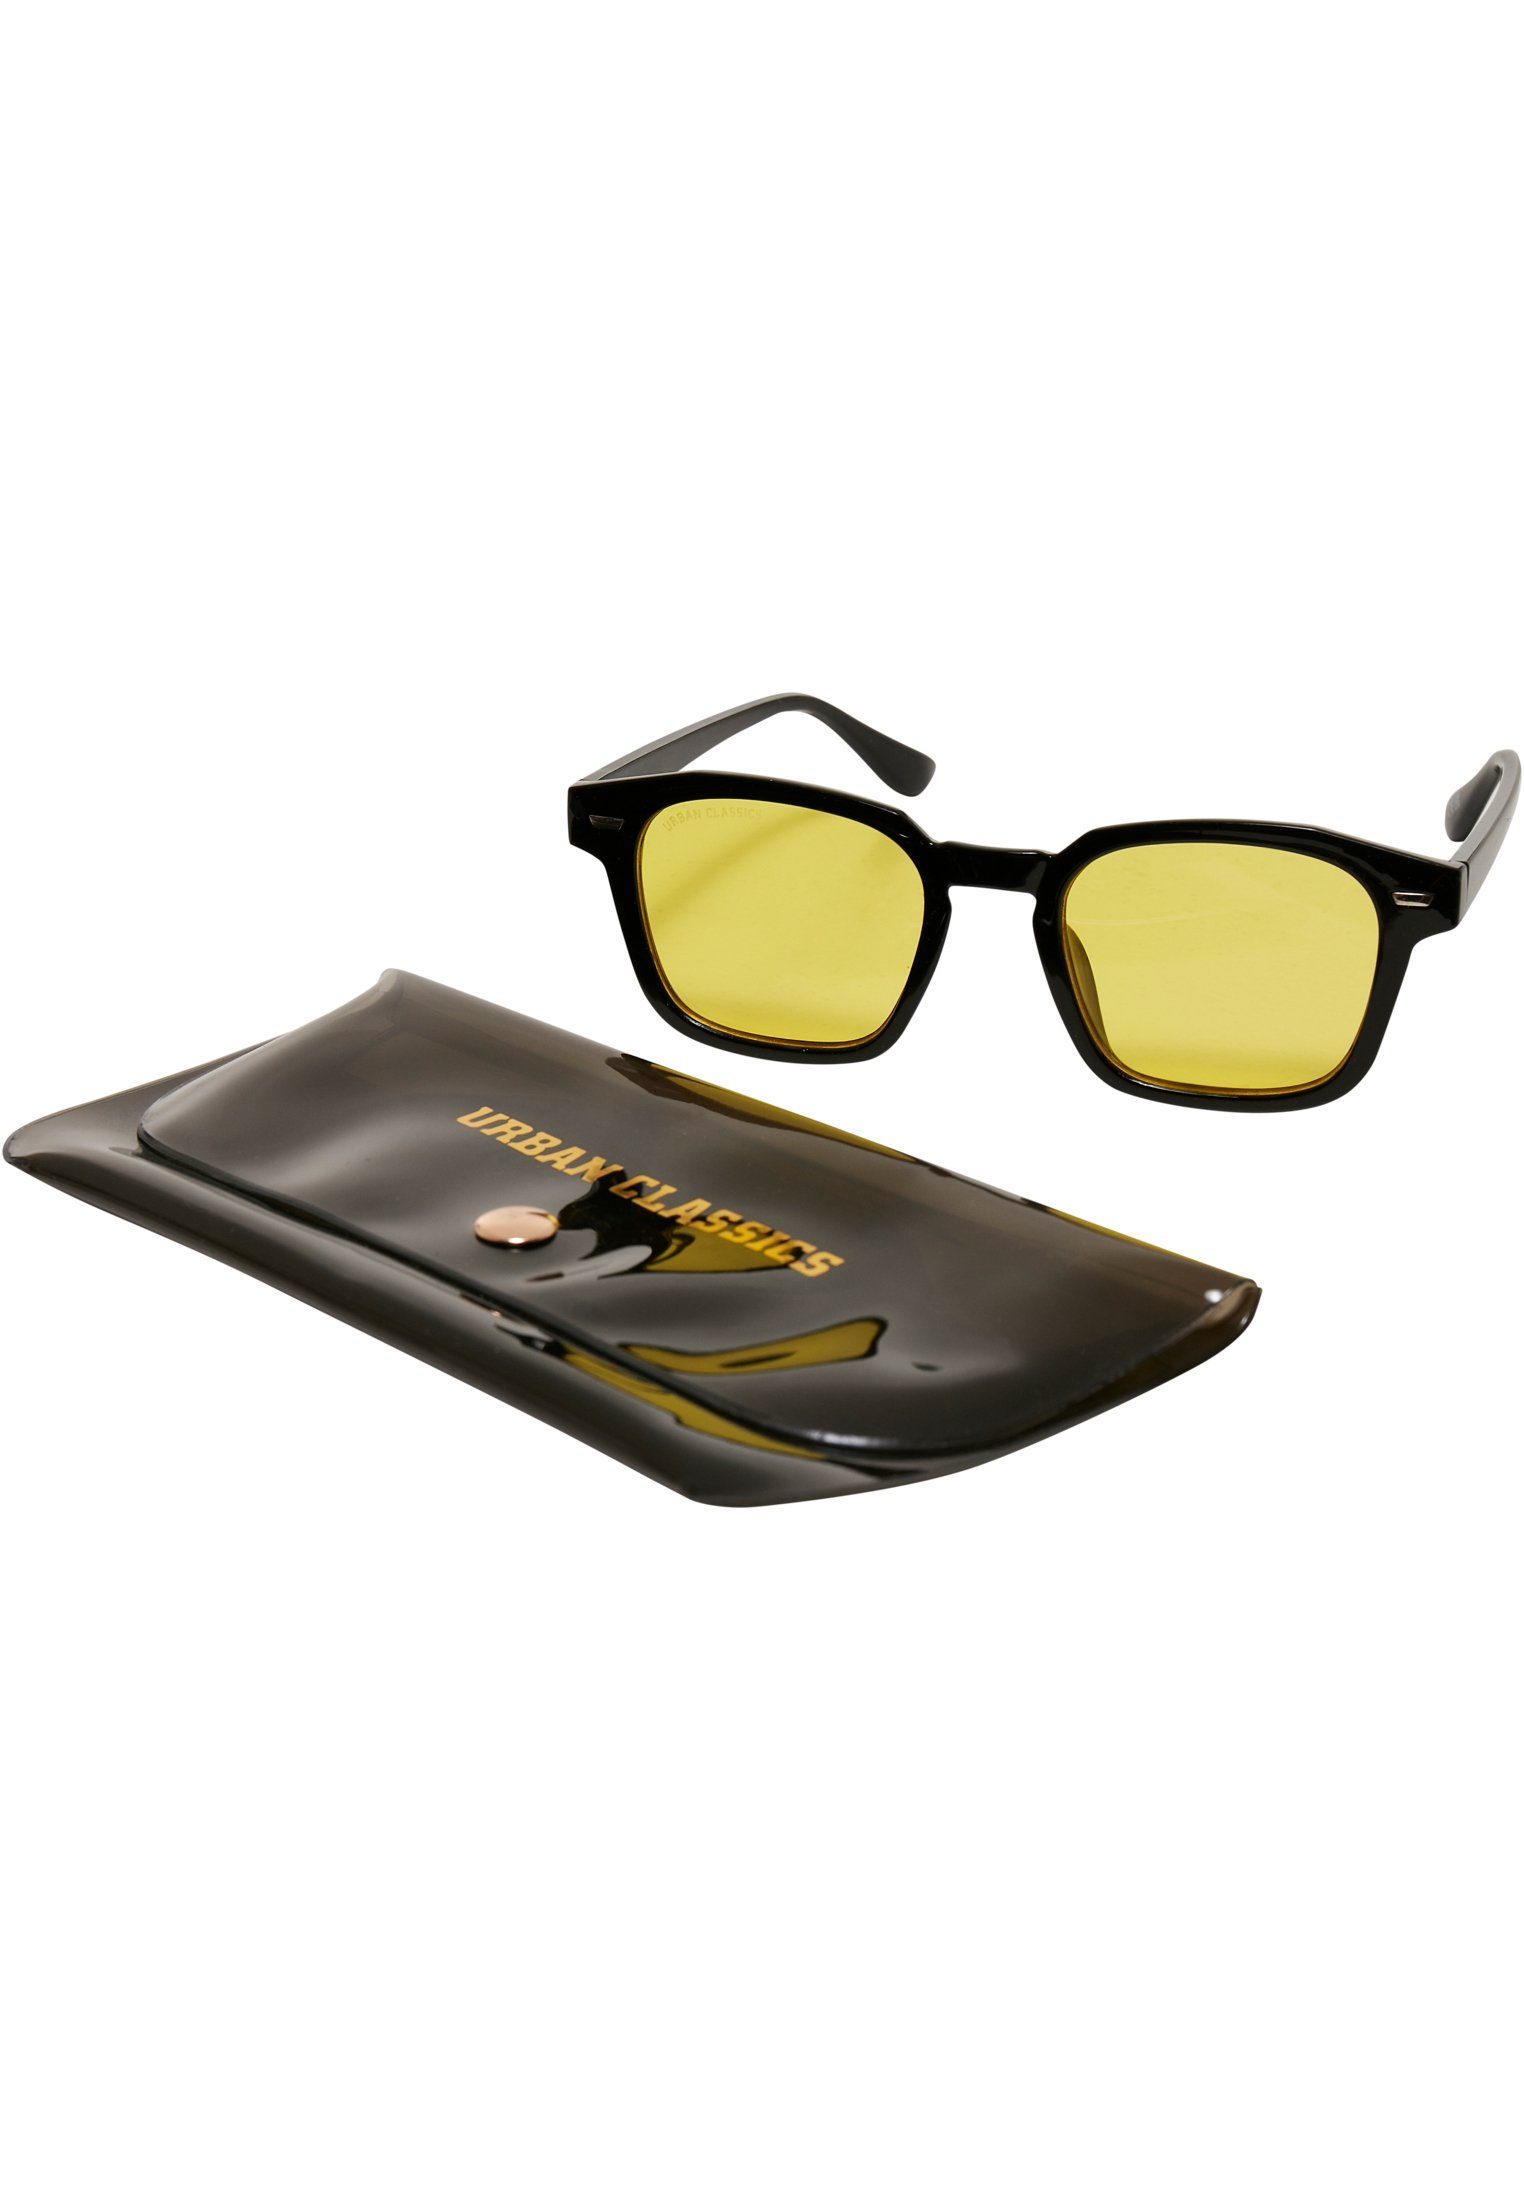 URBAN CLASSICS Sonnenbrille Unisex Sunglasses Maui With Case black/yellow